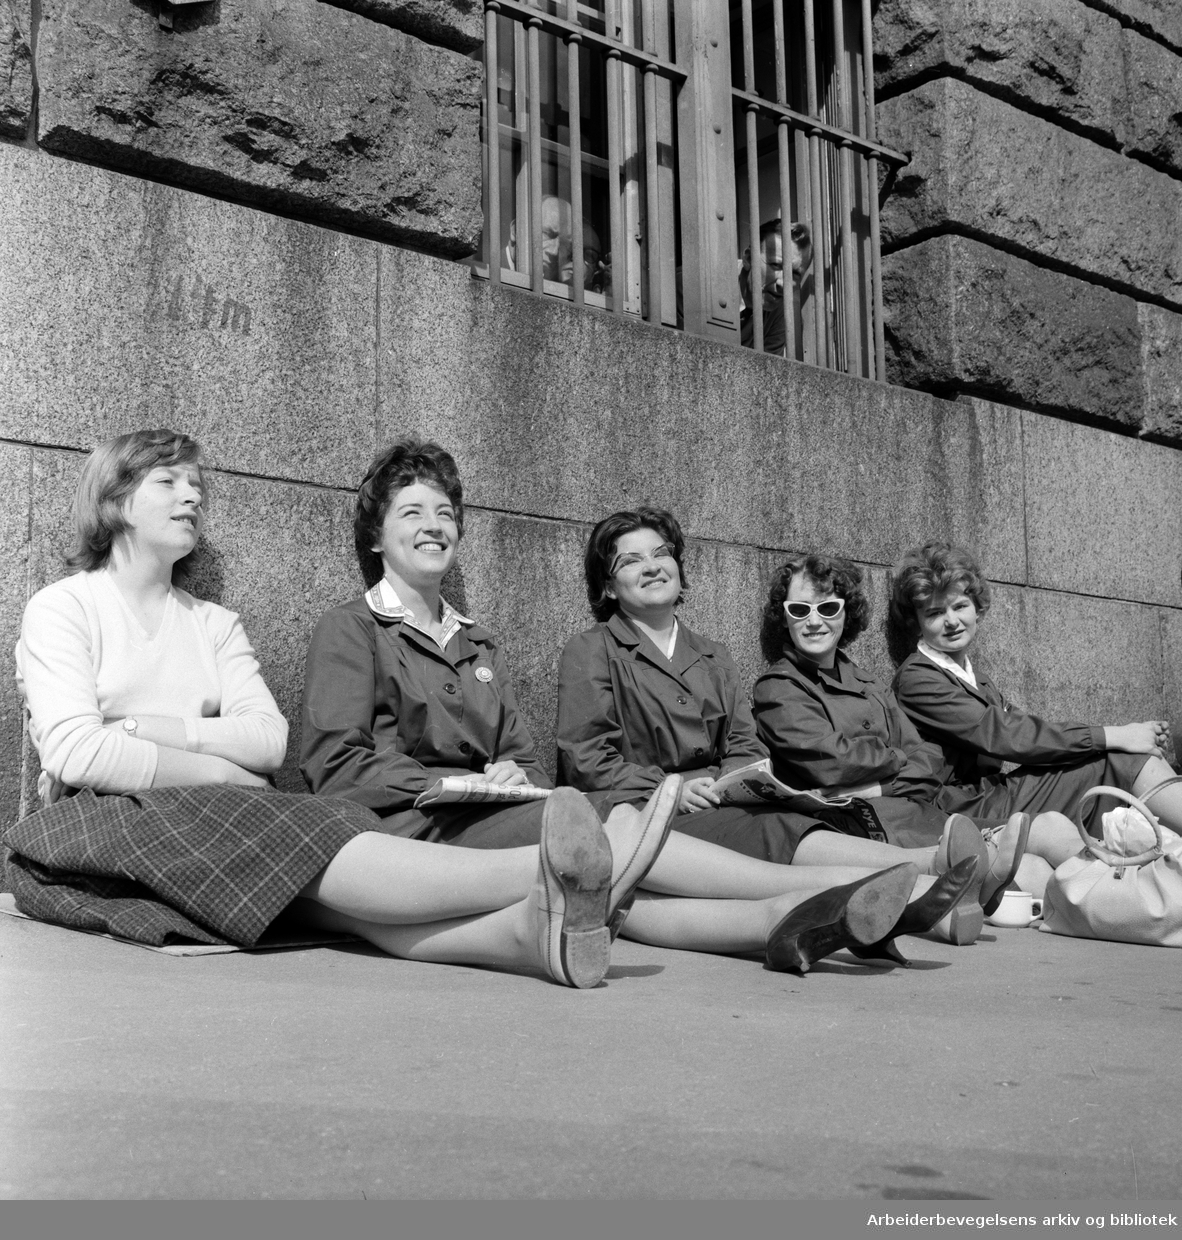 Pause i solveggen utenfor Norges Bank - senere Museet for samtidskunst. Fra venstre: Turid Jensen, Joyce Jensen, Karin Wallner, Bjørg Eltvik og Aase Wangberg. April 1960.